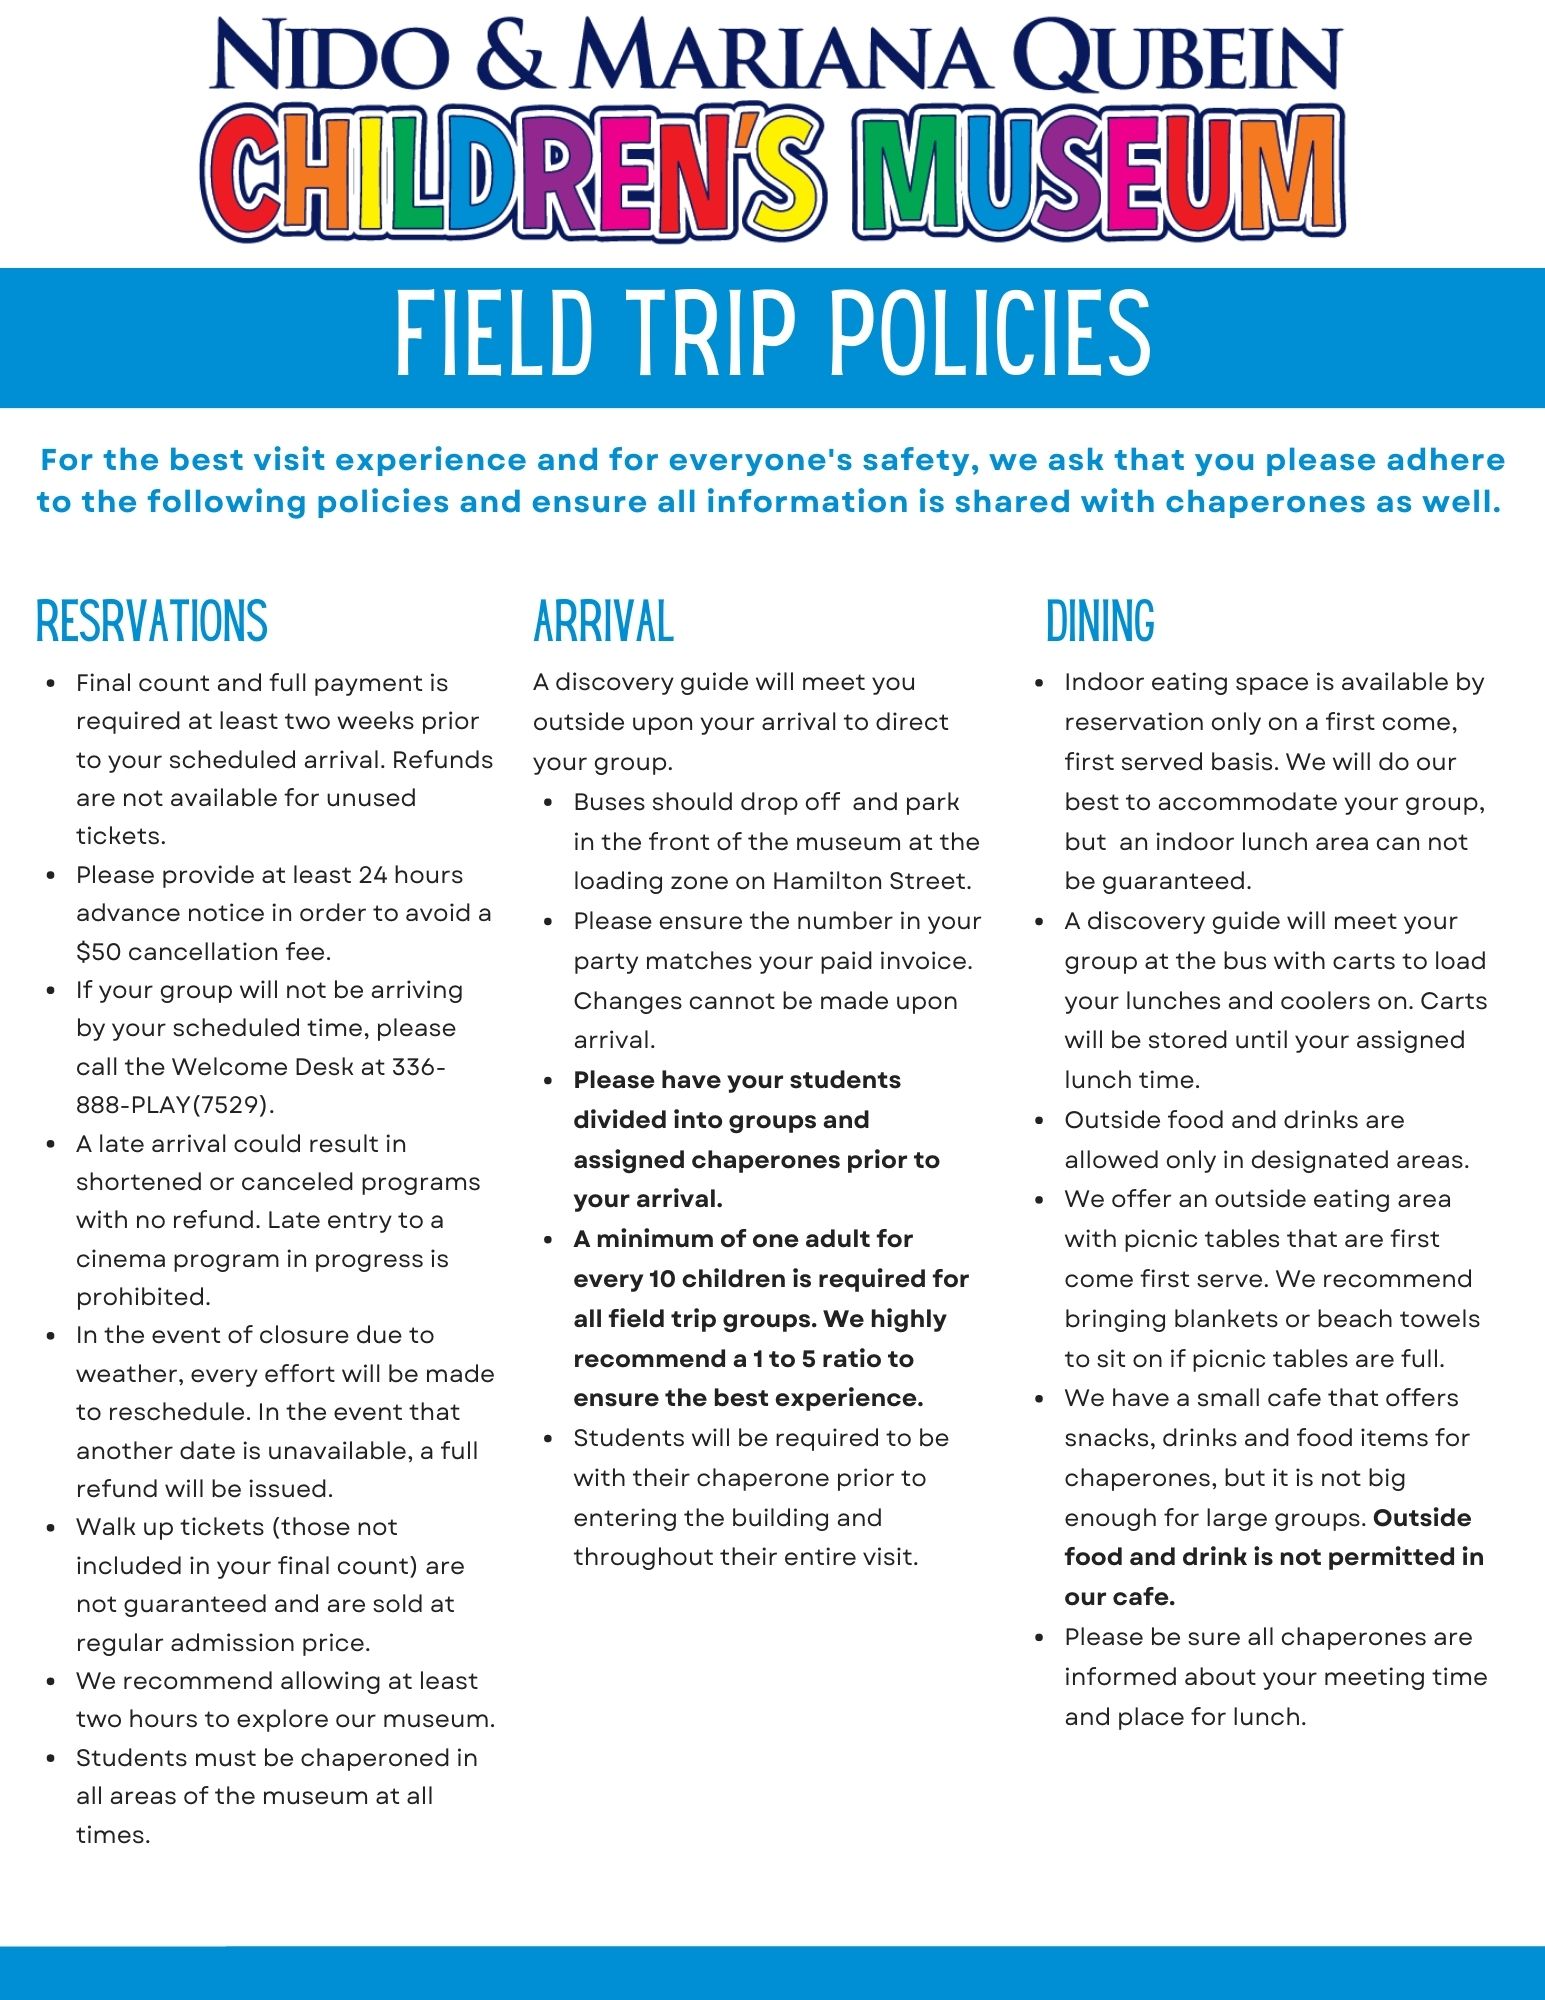 Field Trip Policies 